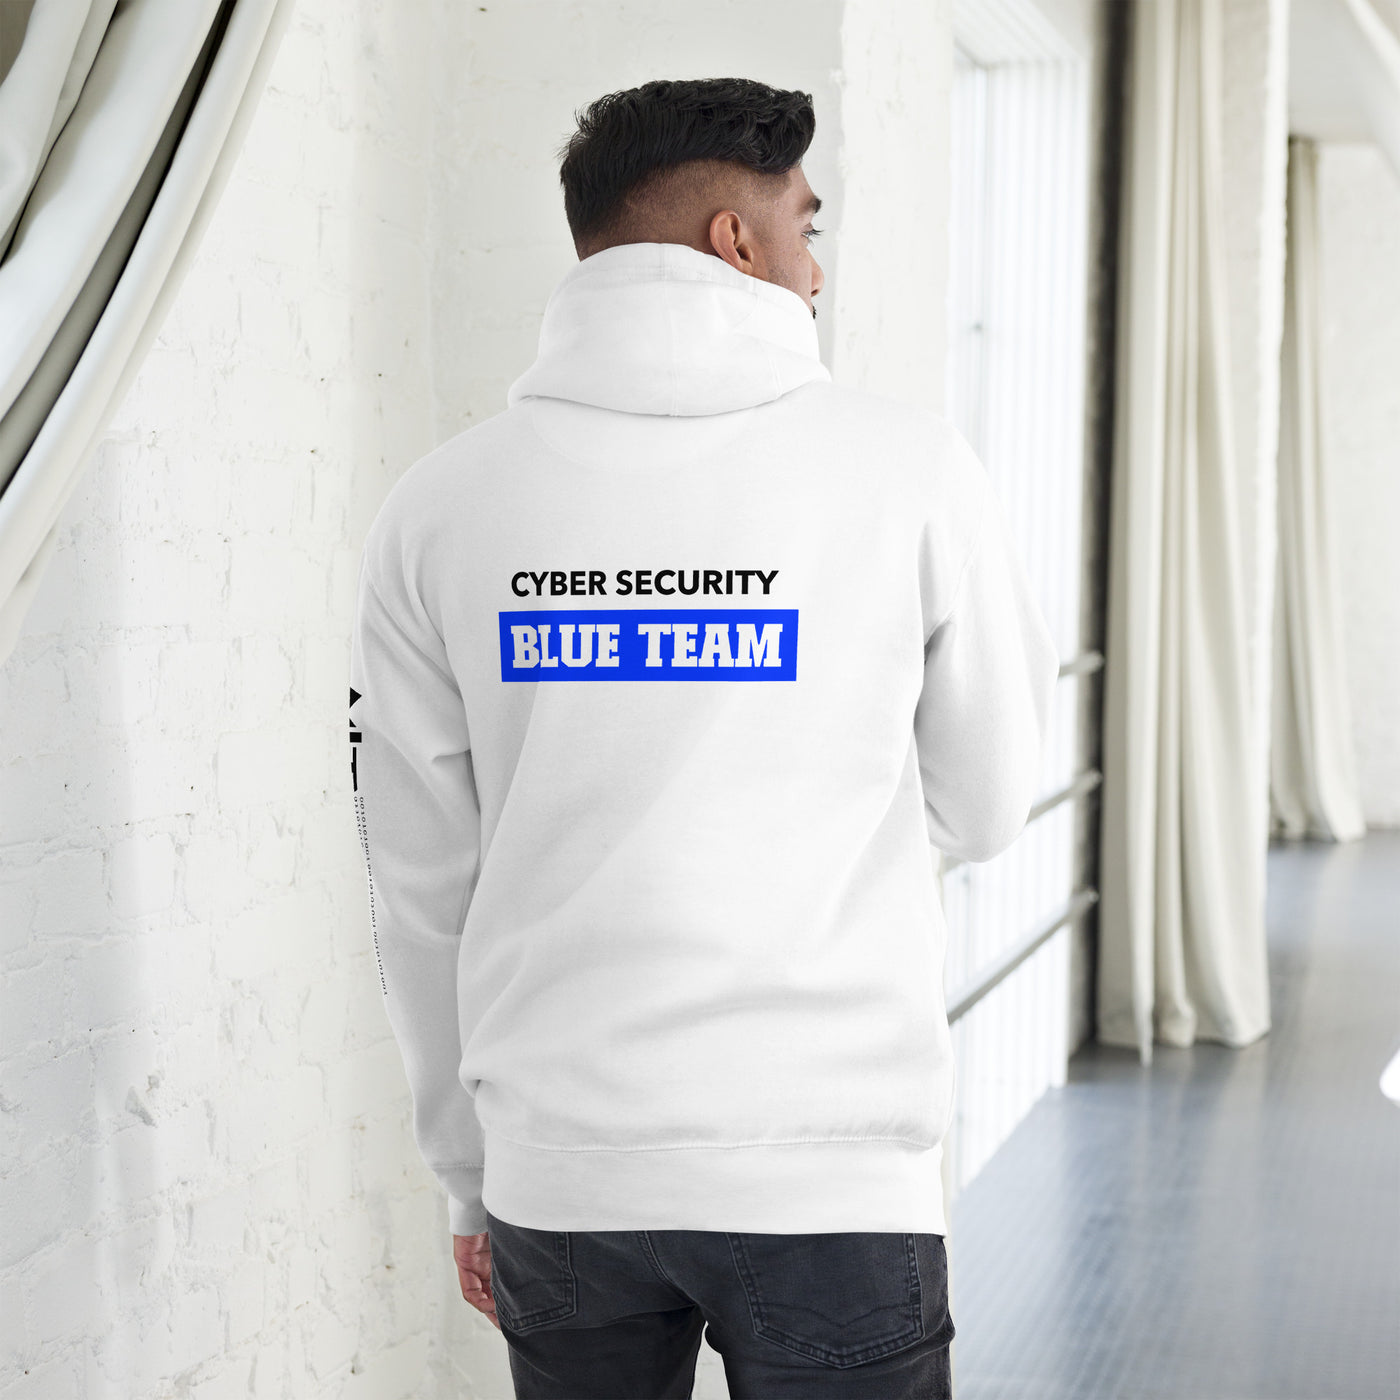 Cyber Security Blue Team V10 - Unisex Hoodie